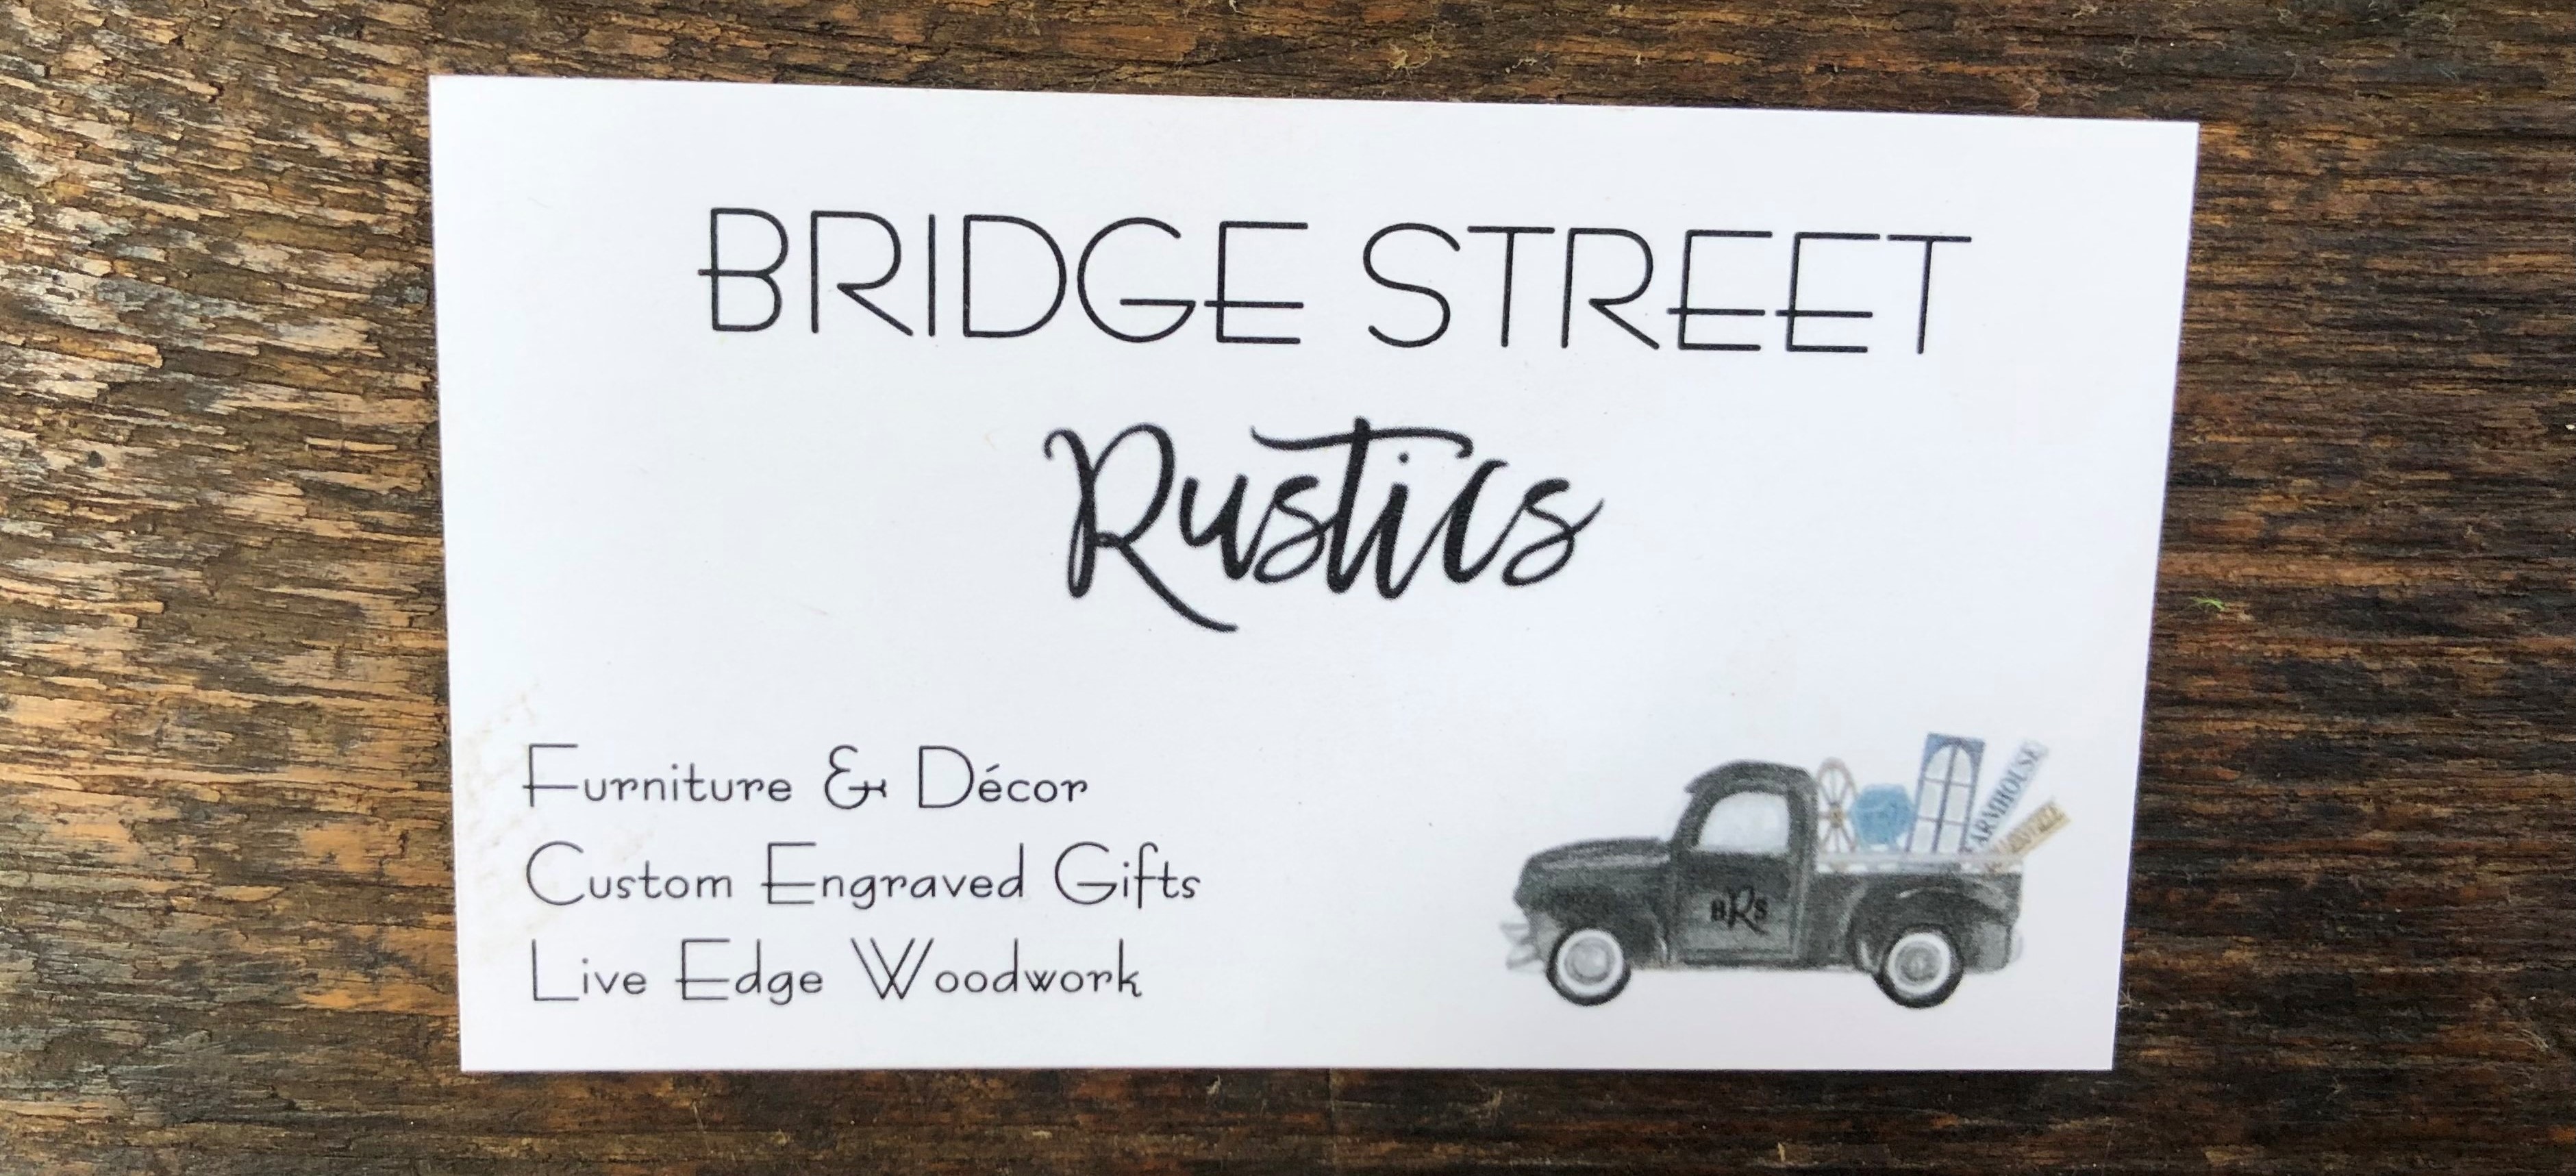 Bridge Street Rustics Business Card